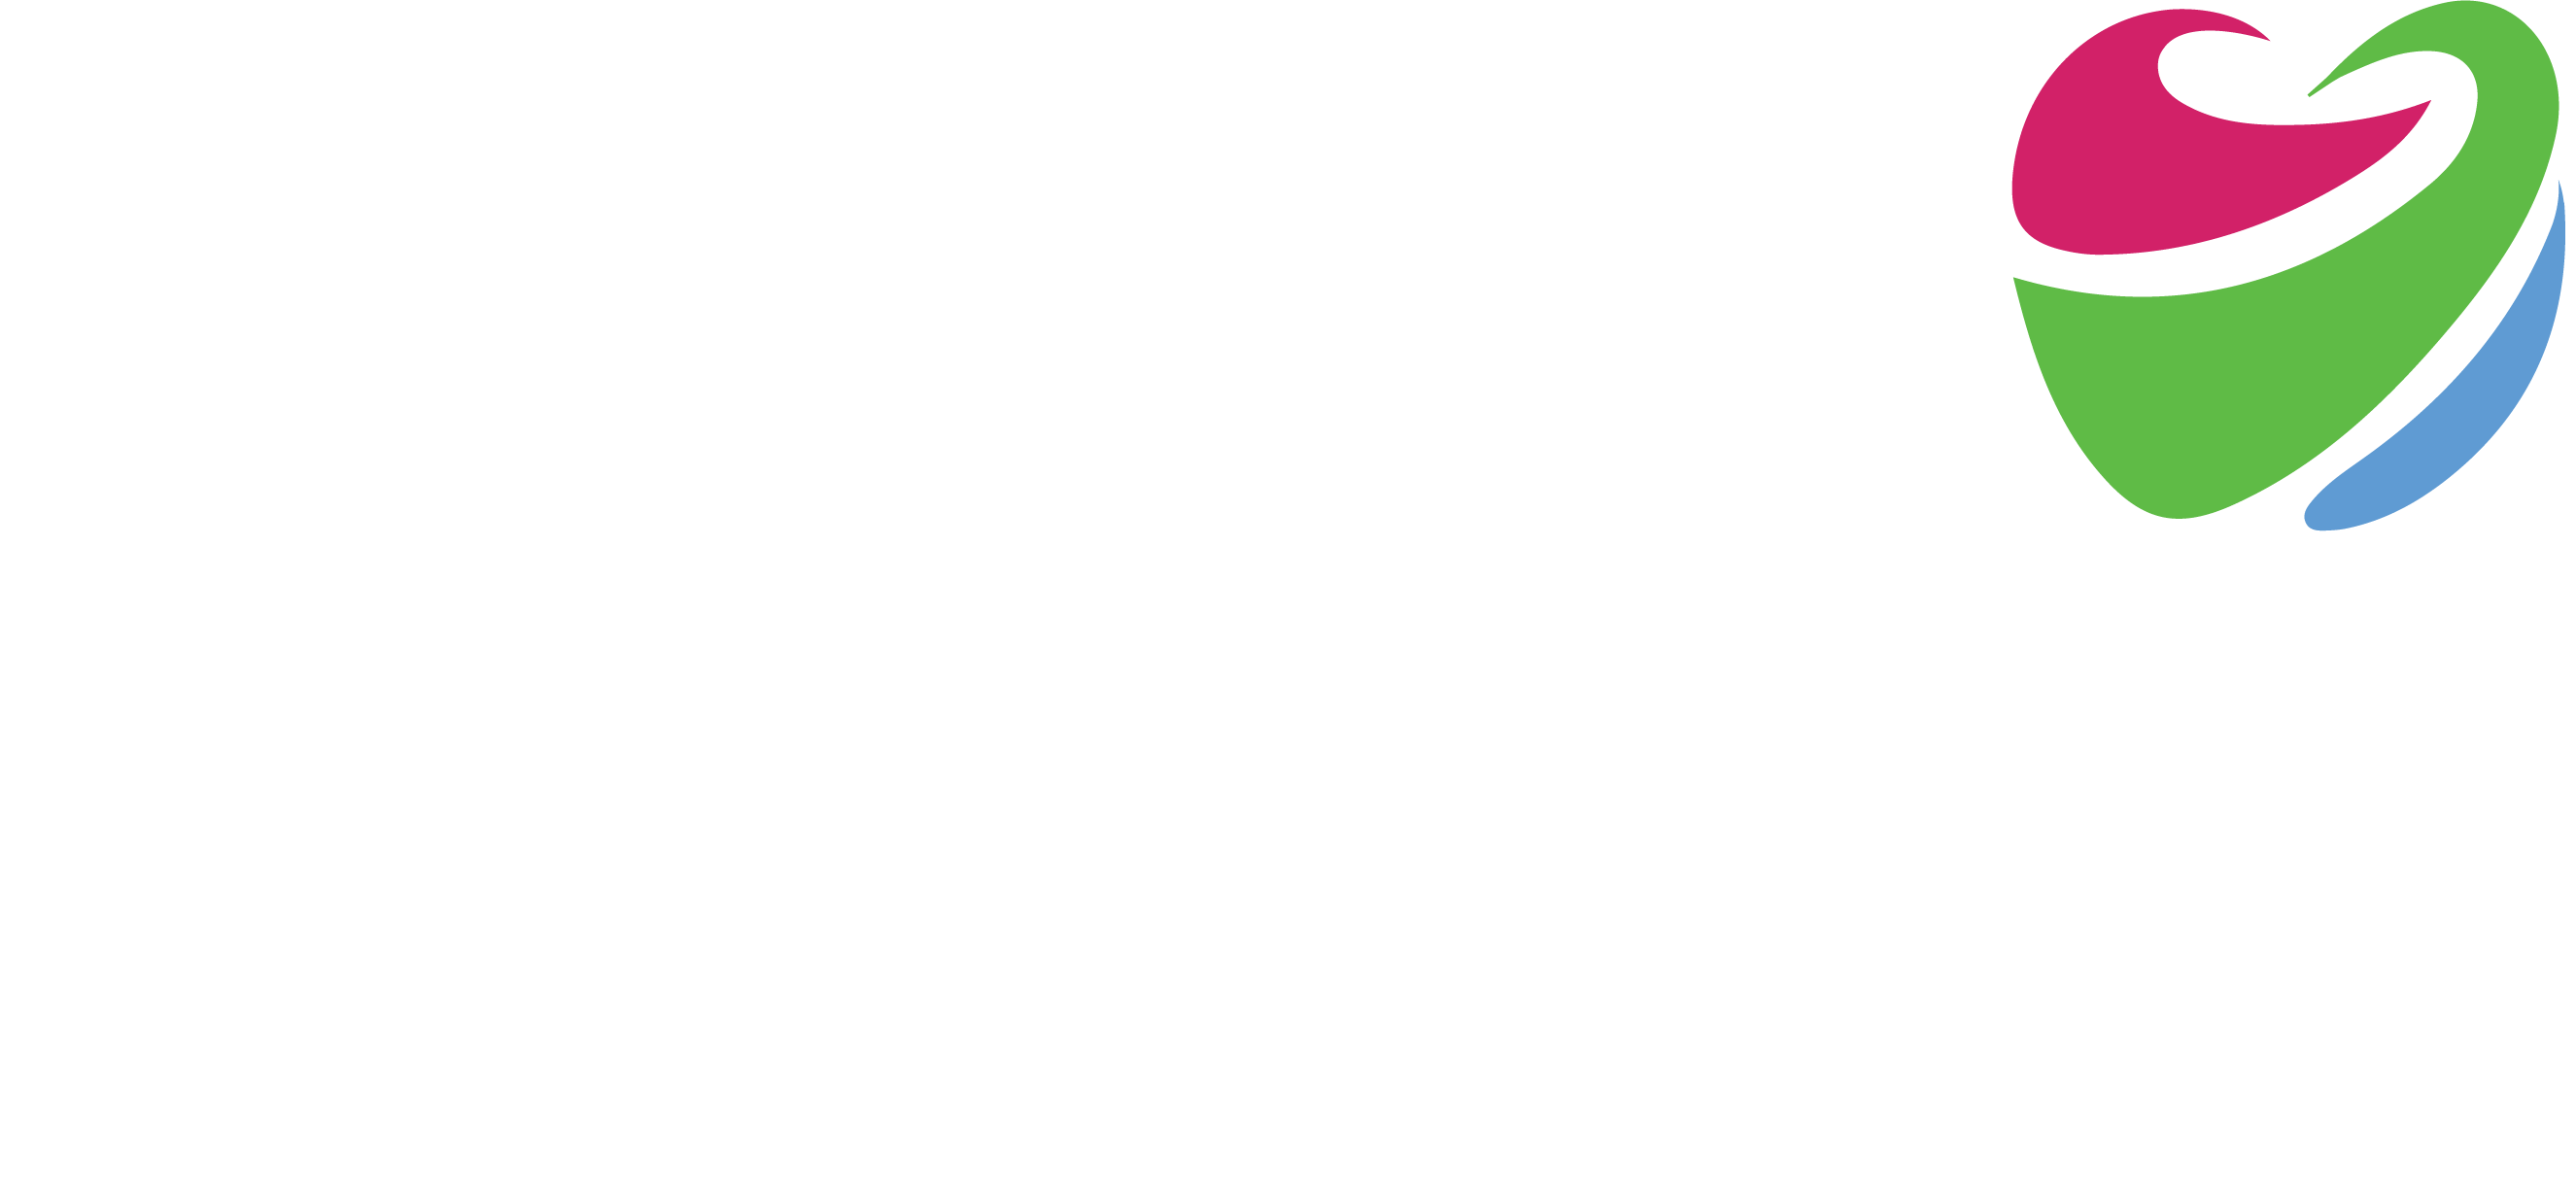 IHW Council Global Summit